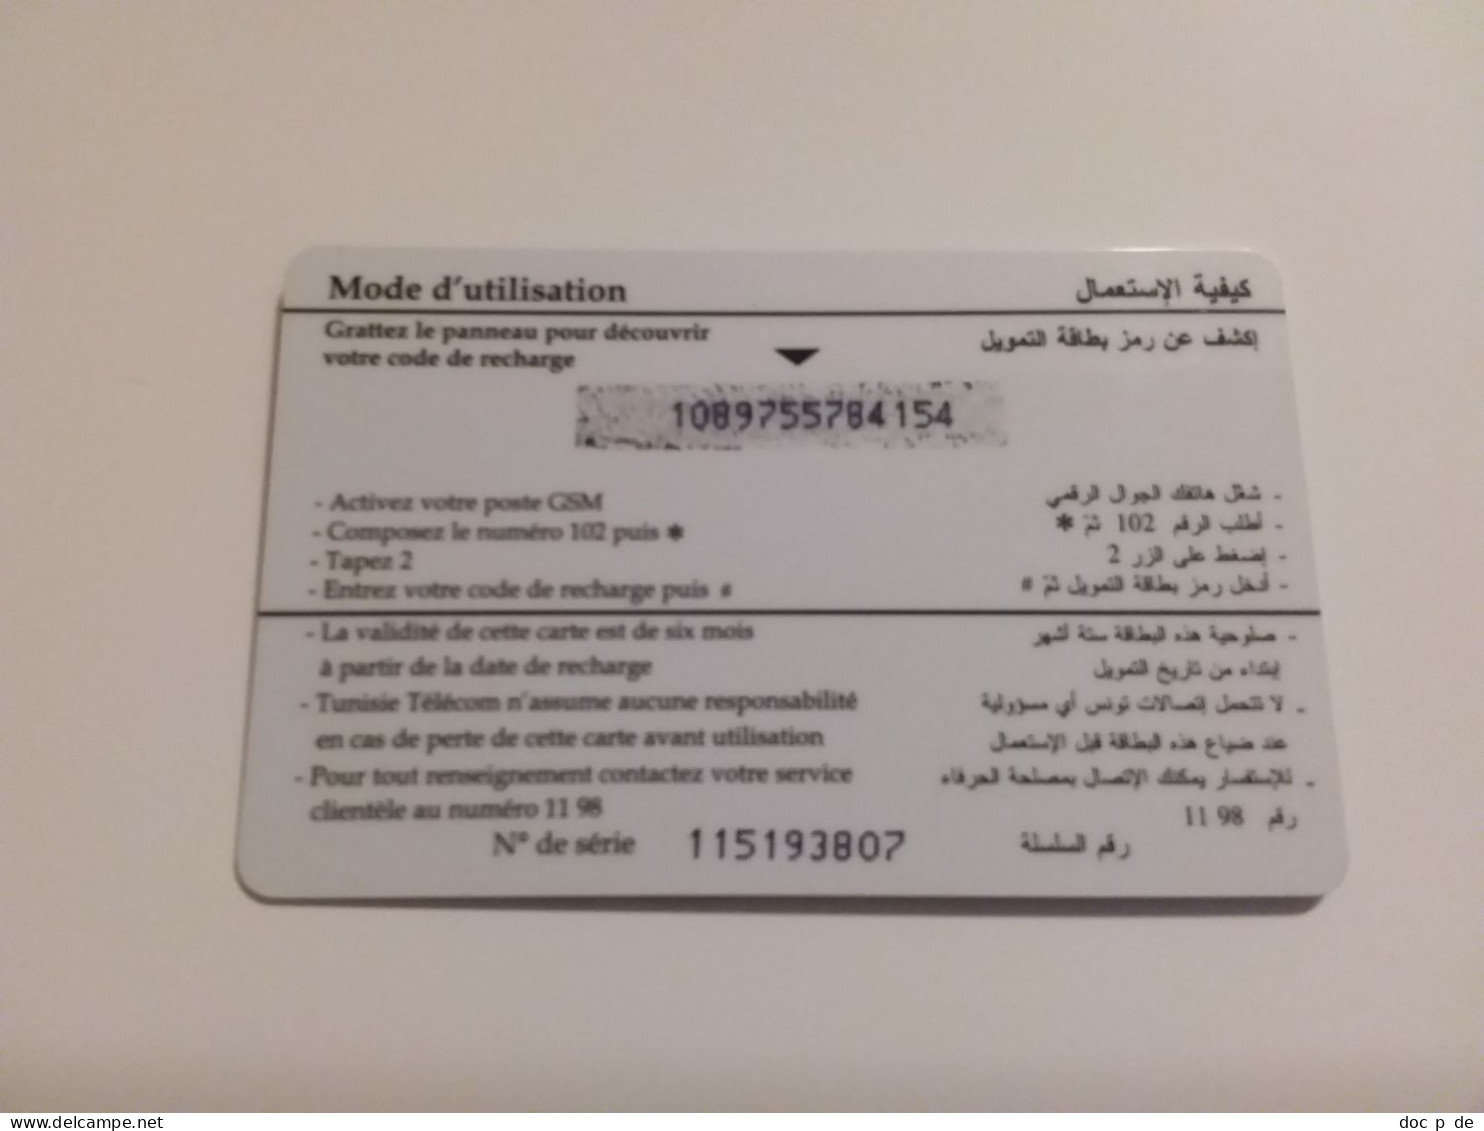 Tunesia - Prepaid GSM Calling Card  - Camel Animal - Tunisie